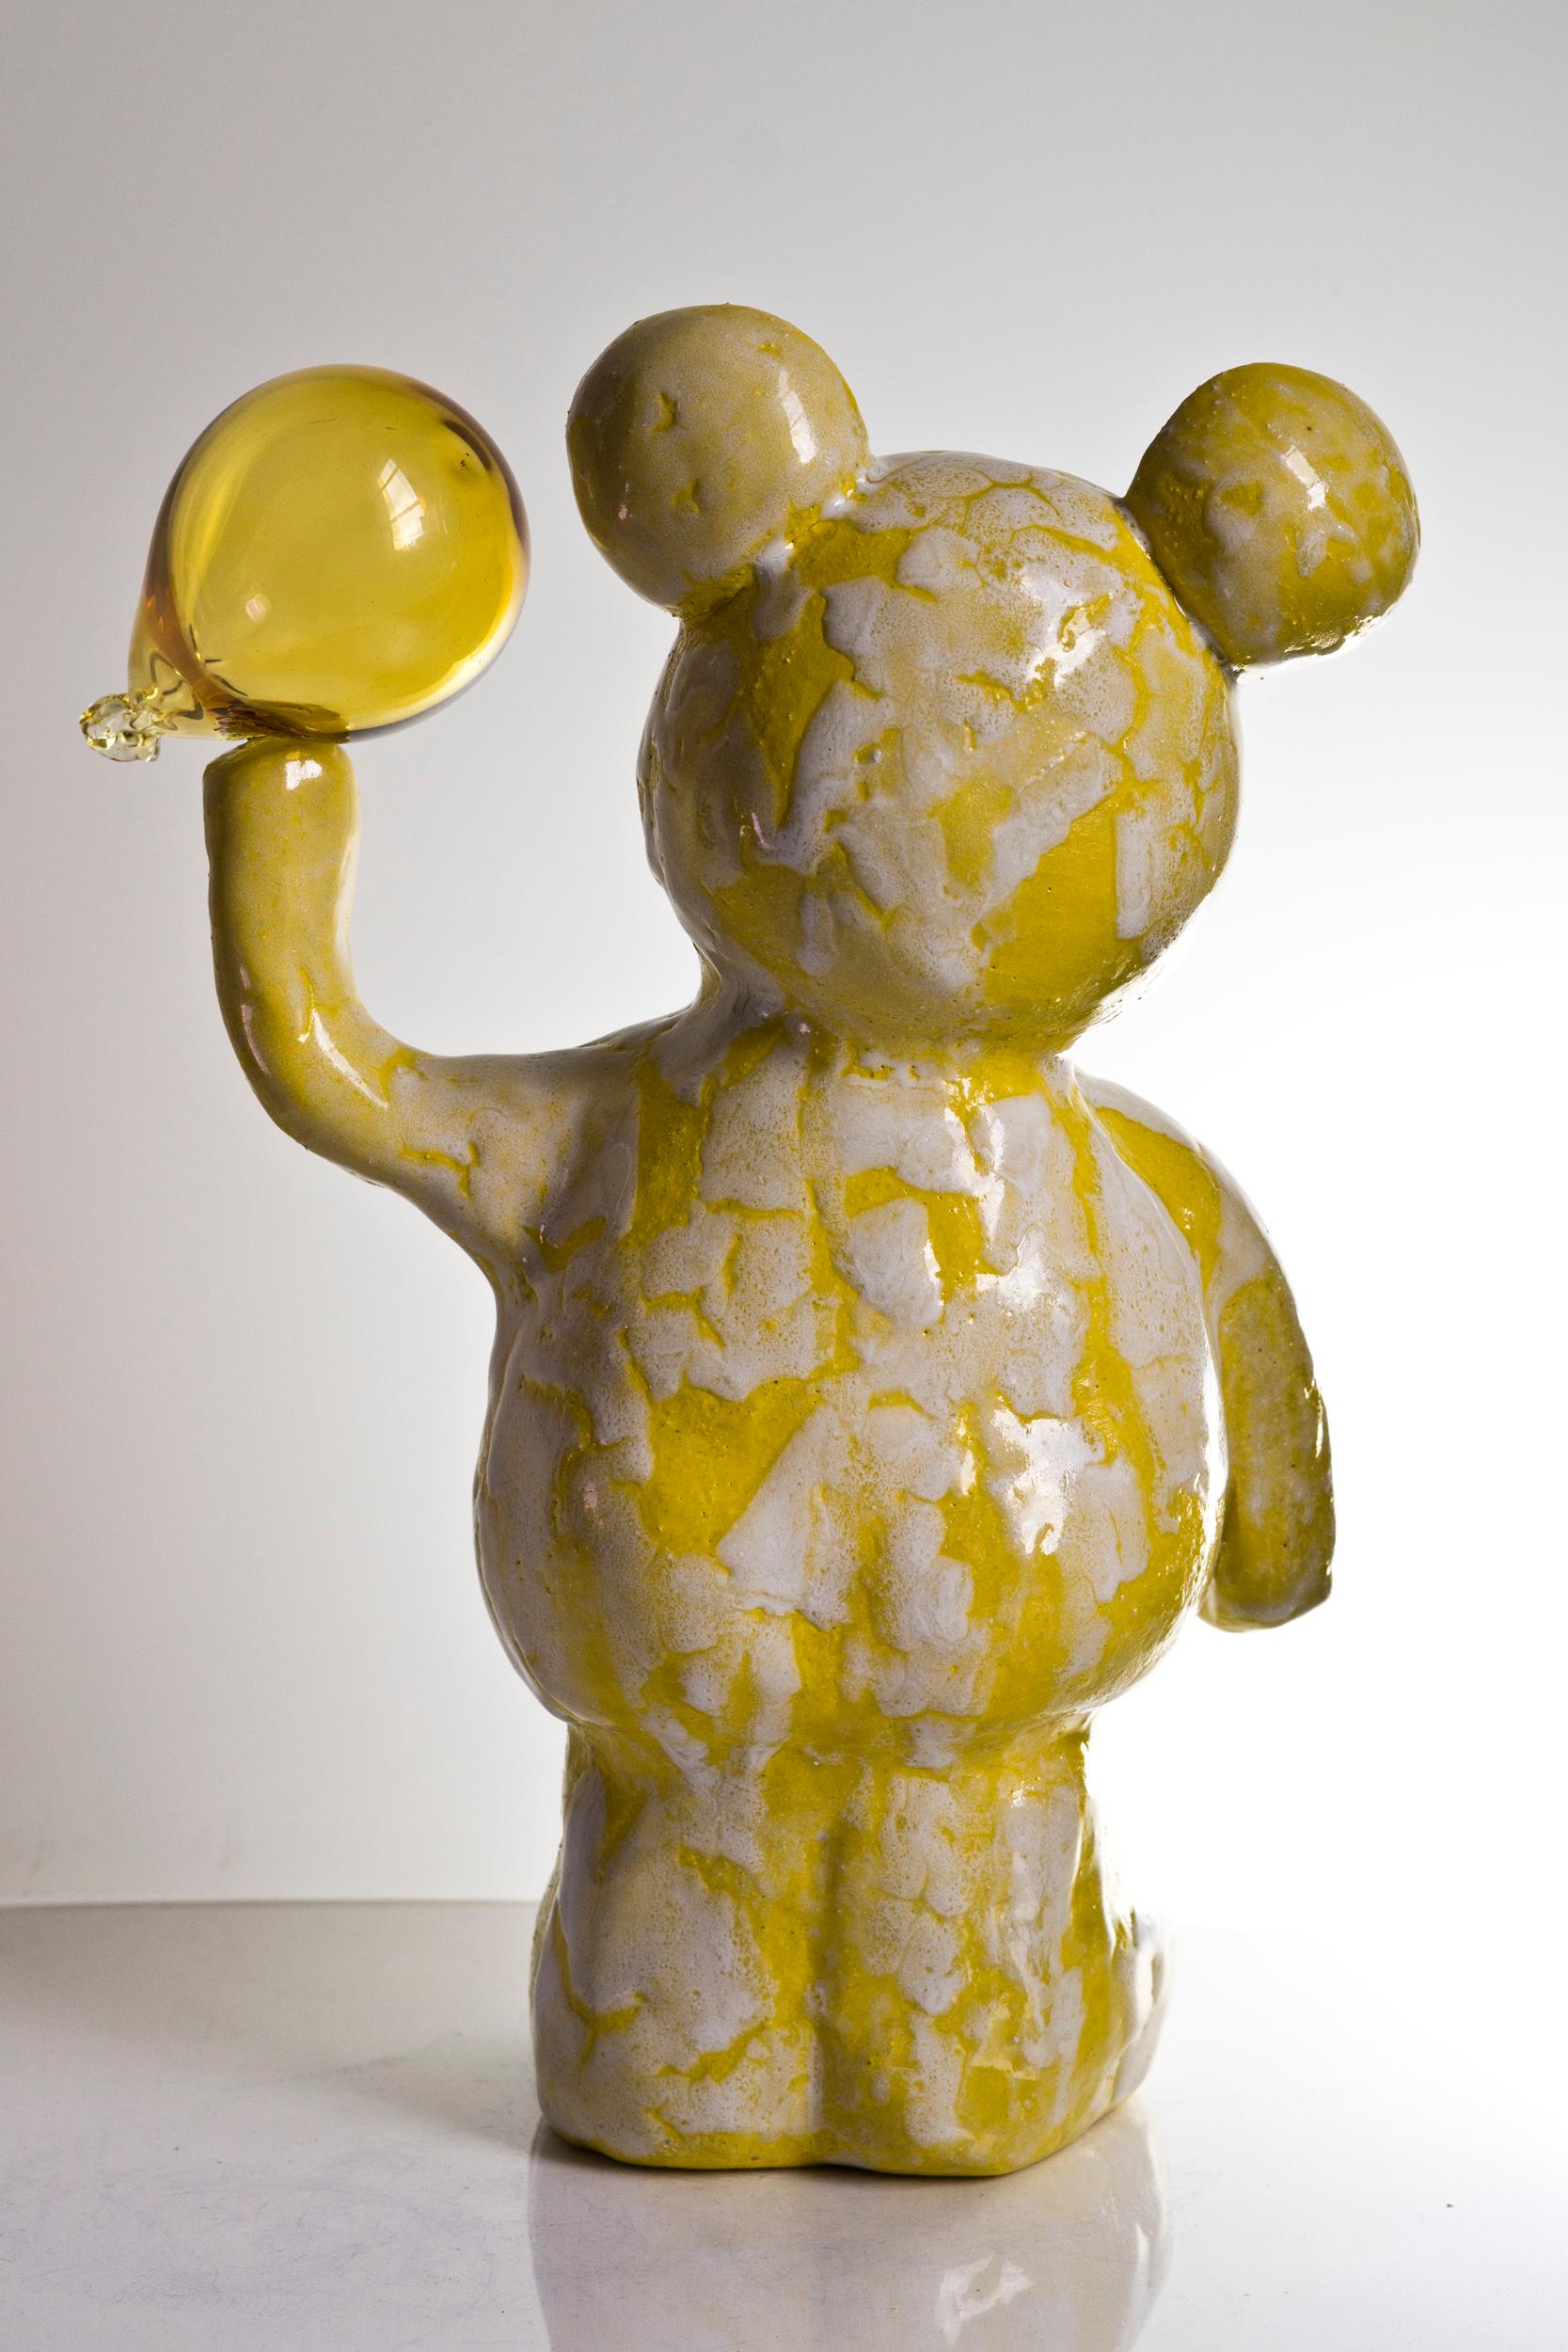 The Optimistic Teddy - Modern Sculpture by Agustina Garrigou